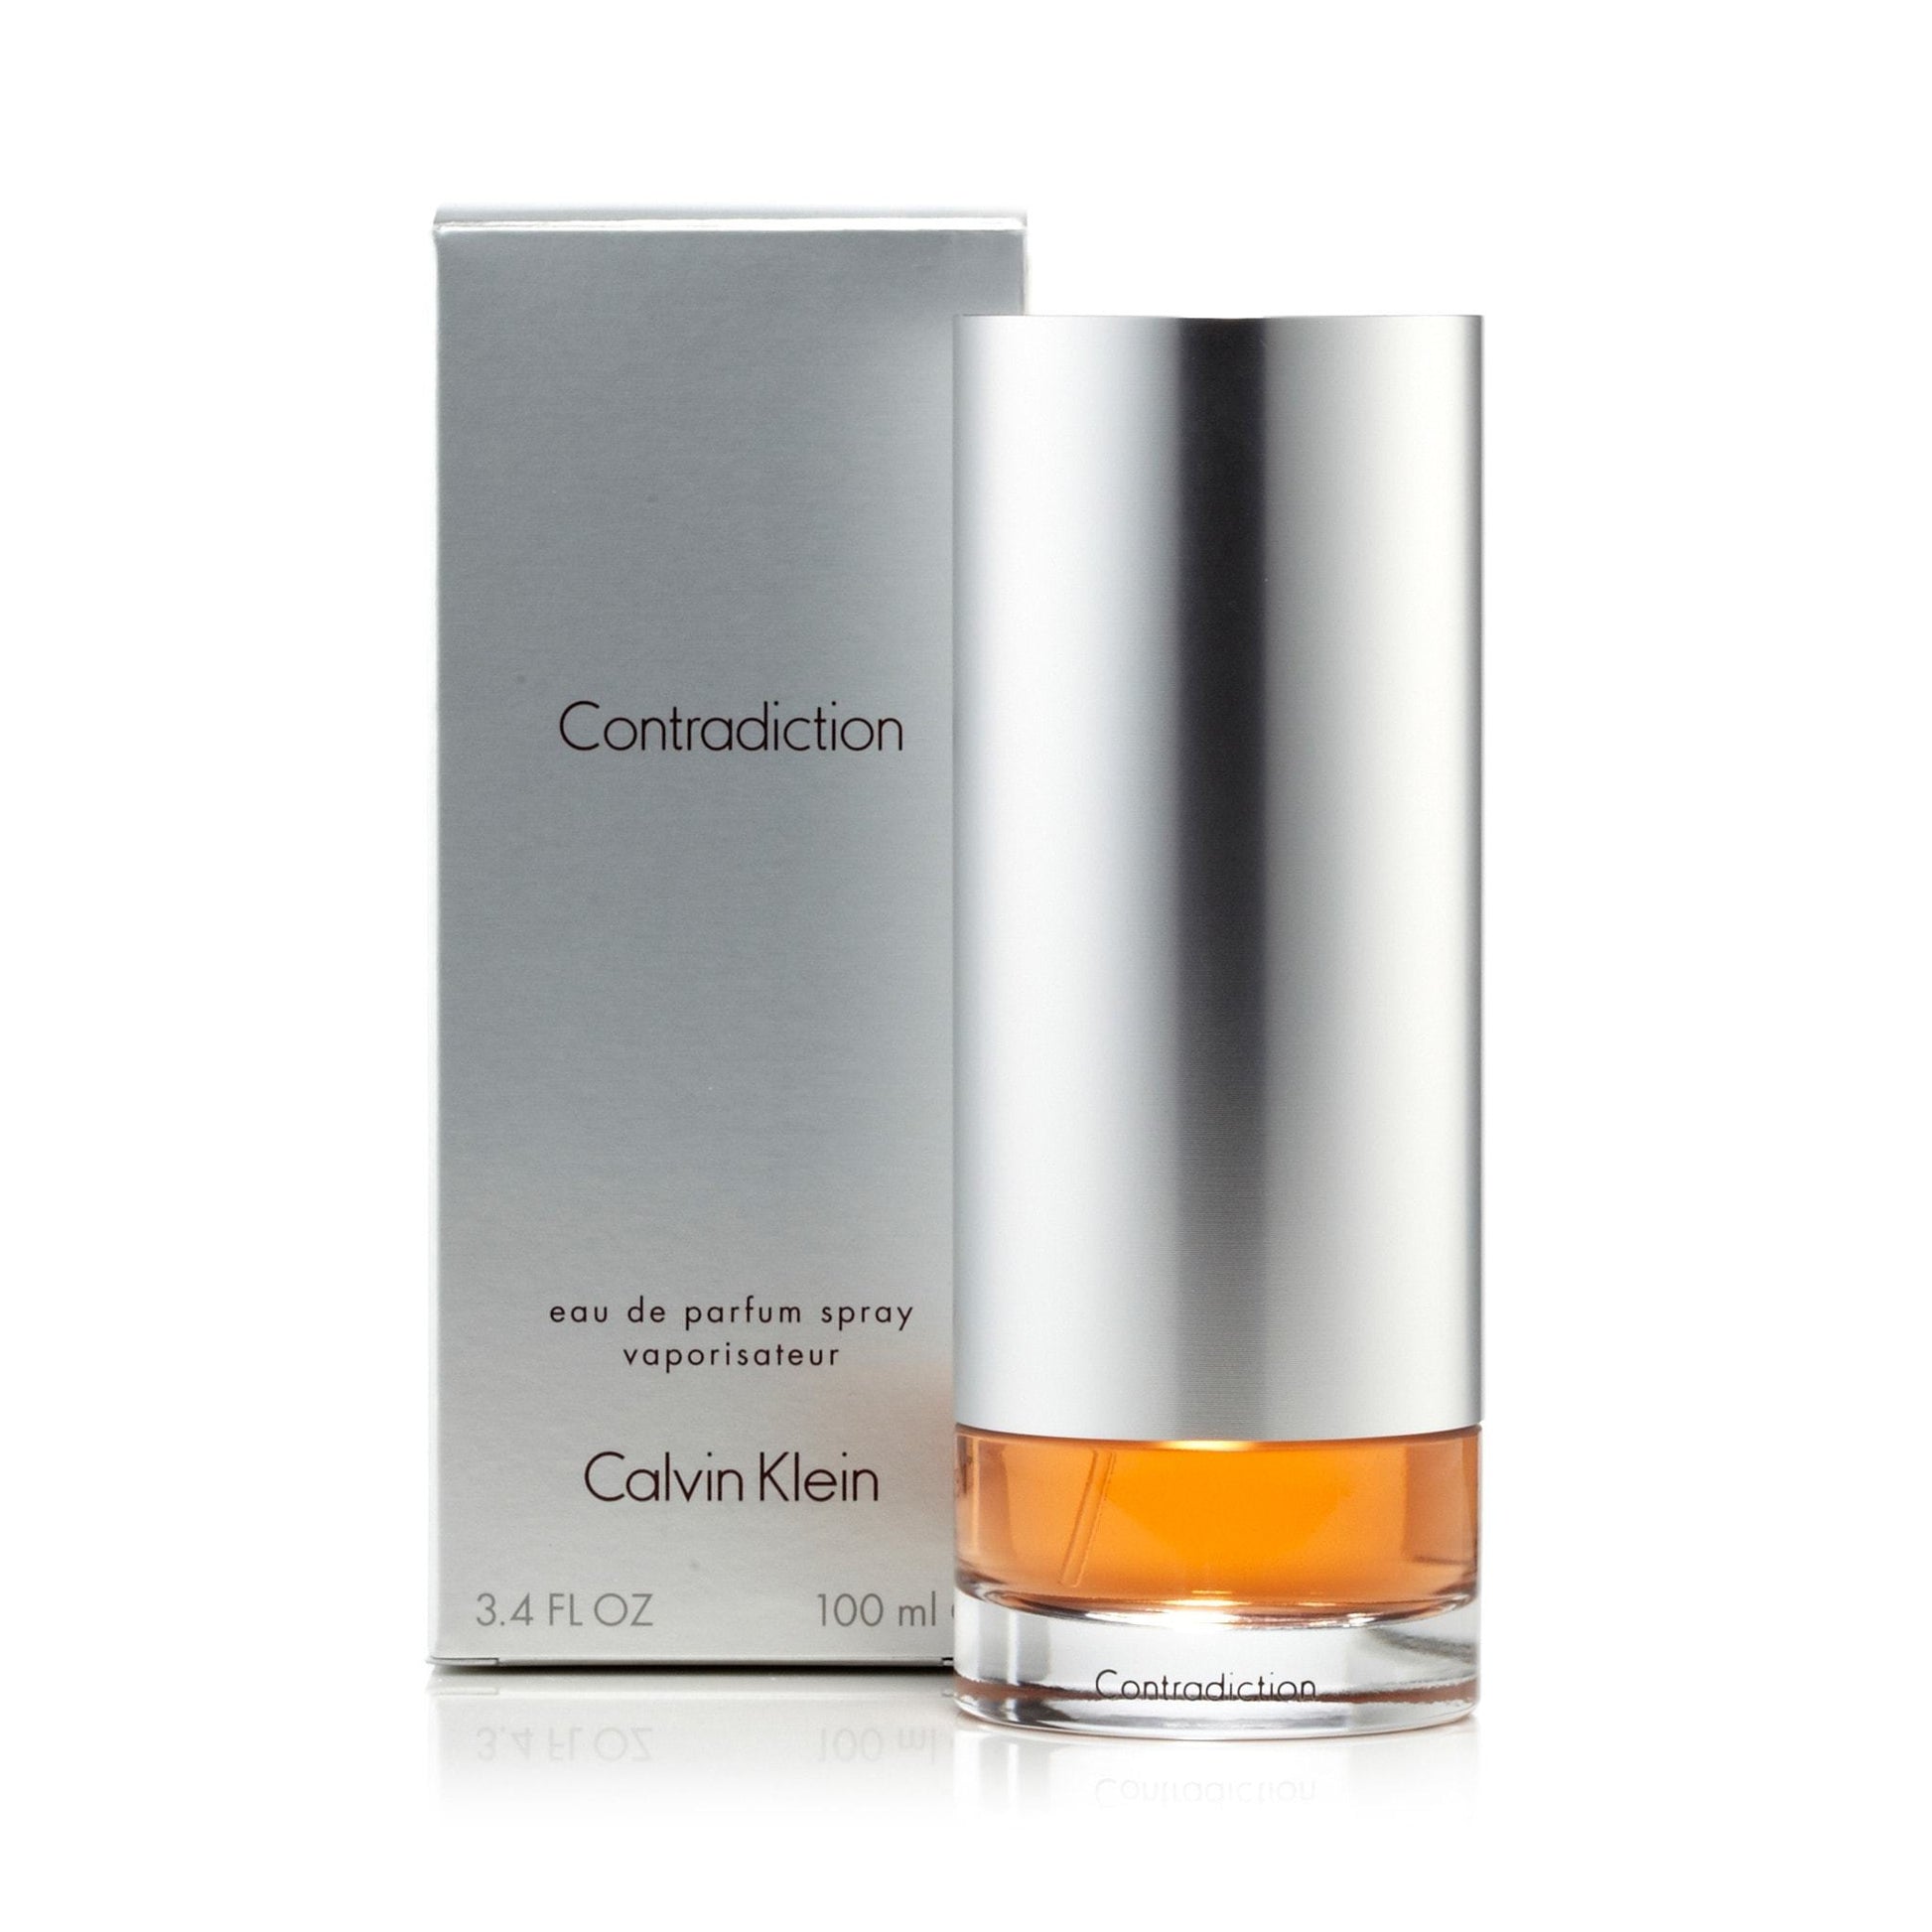 Contradiction Eau de Parfum Spray for Women by Calvin Klein, Product image 1